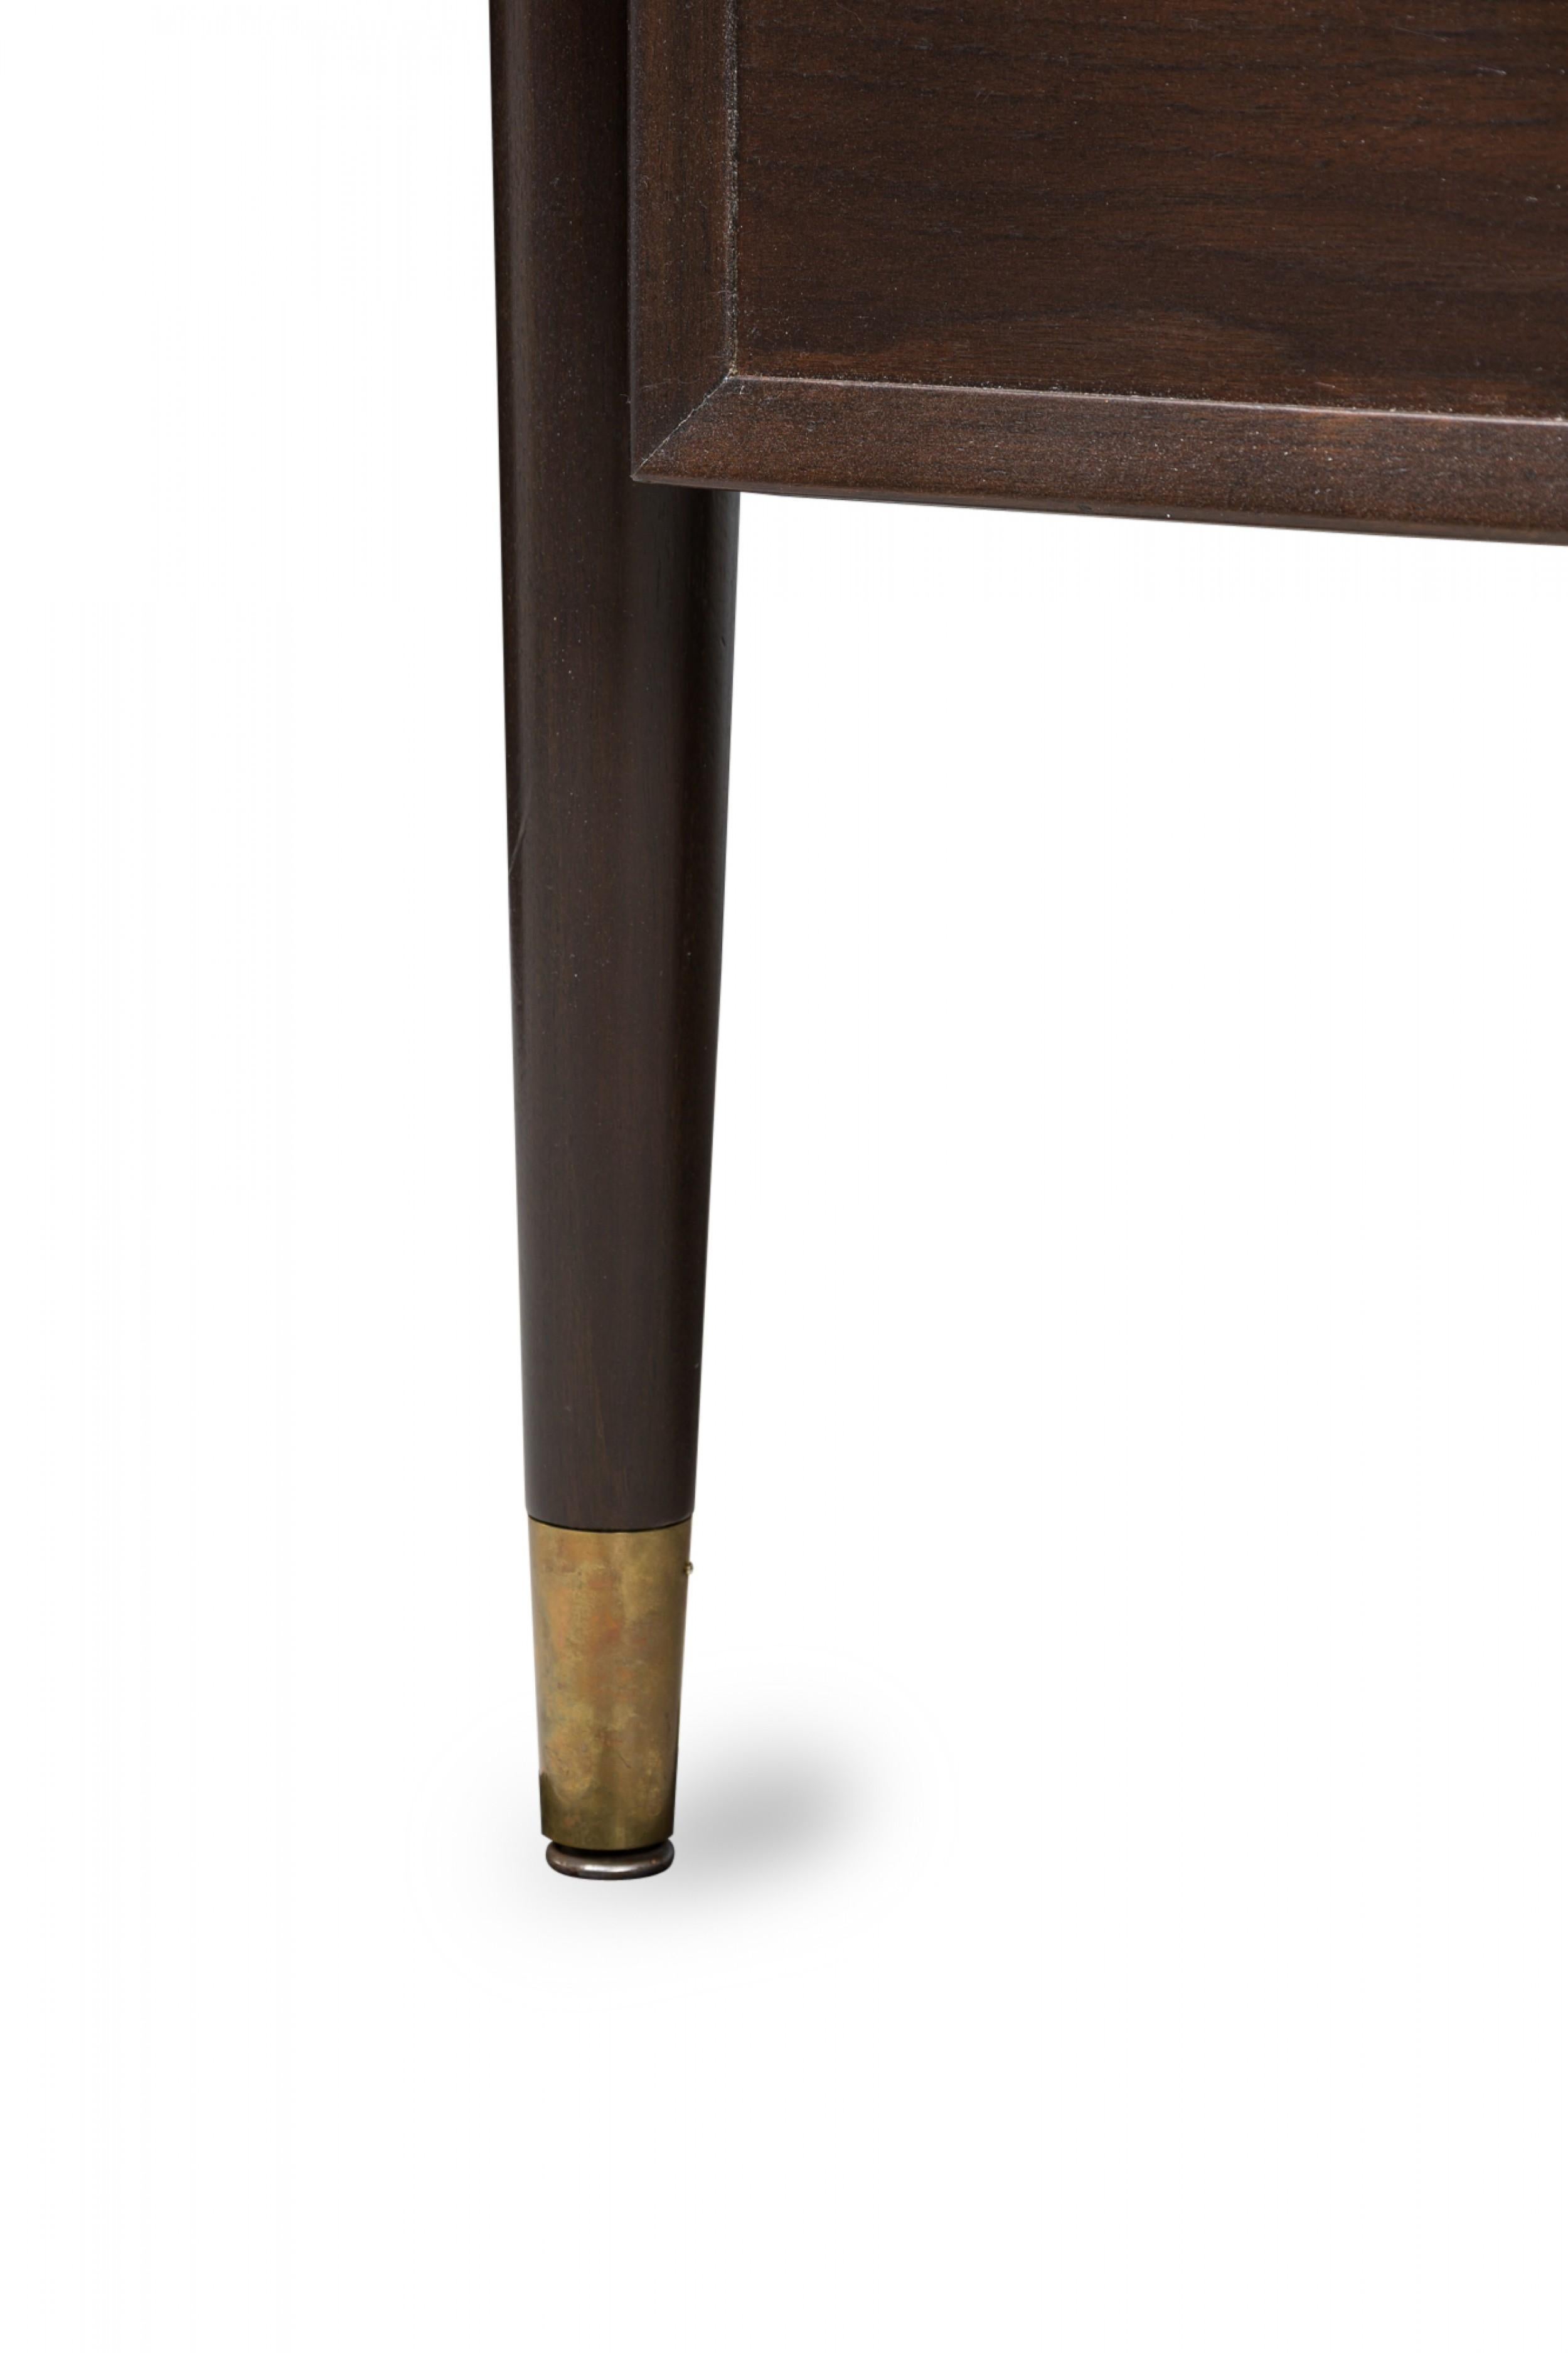 20th Century Standard Furniture Co. American Dark Wood Veneer & Brass Executive Desk For Sale